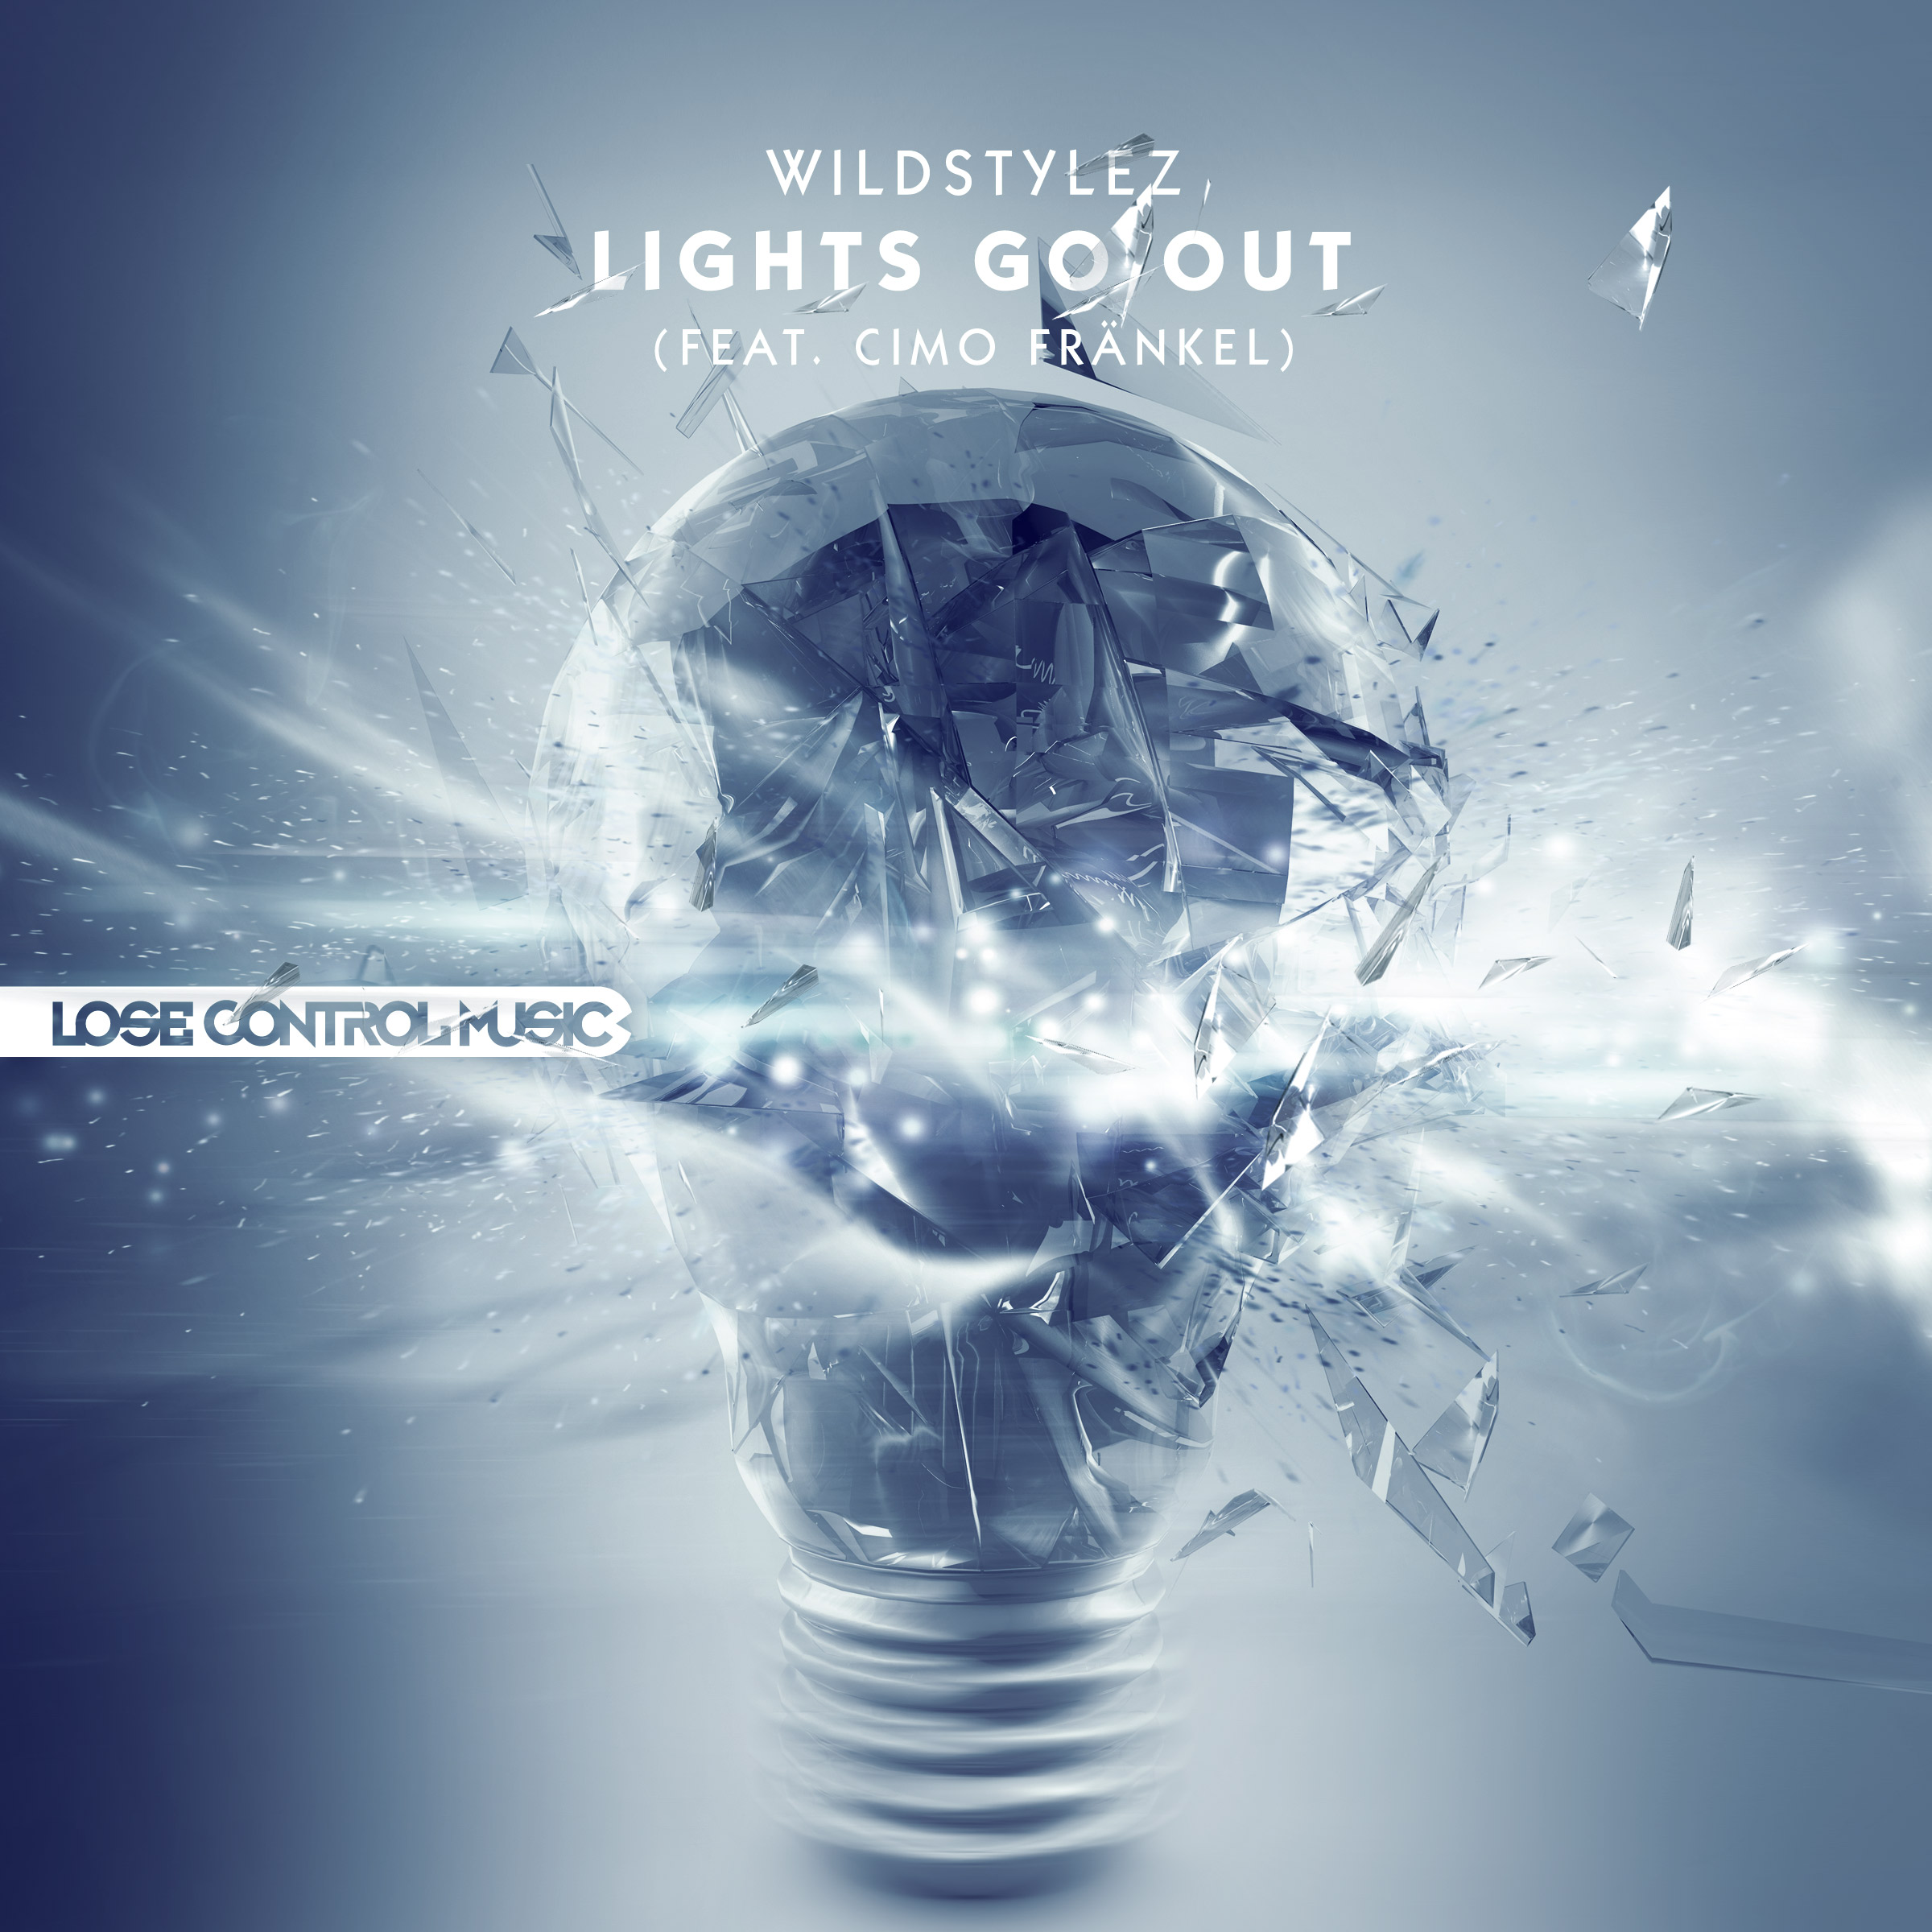 Wildstylez - Lights Go Out feat. Cimo Fränkel 2400x2400px-372dpi